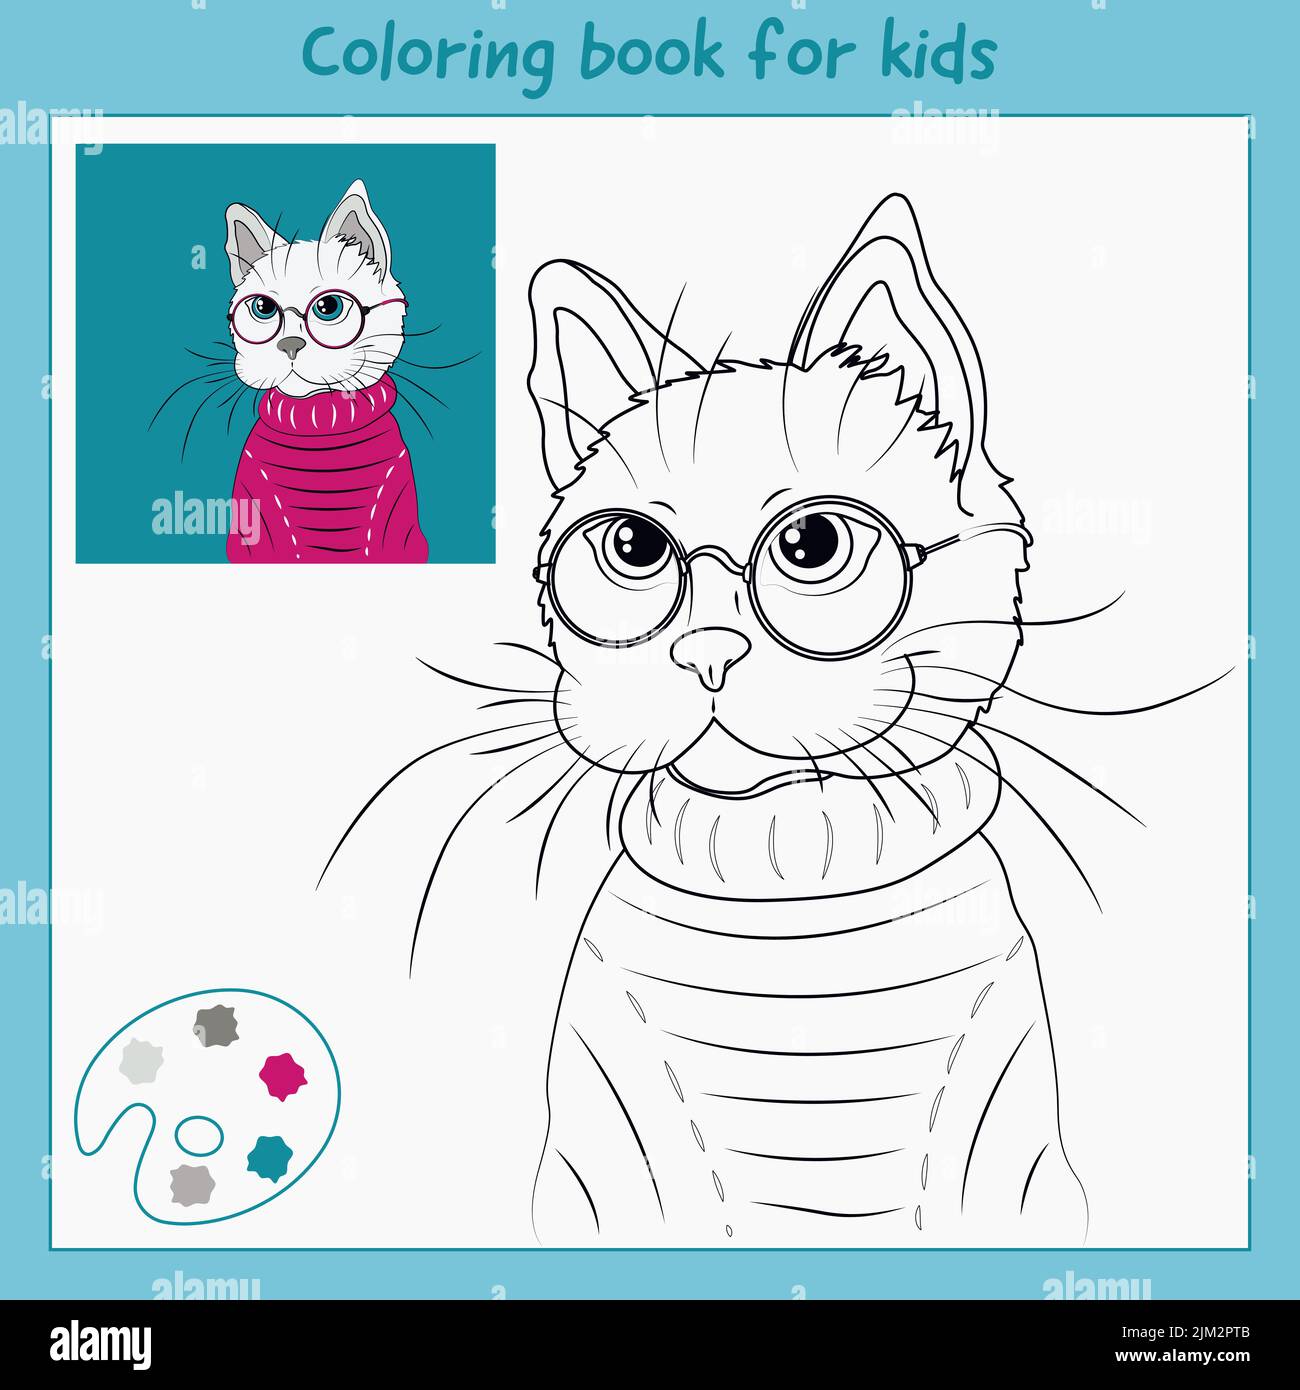 Coloring book for kids. Tasks for children. Stock Vector